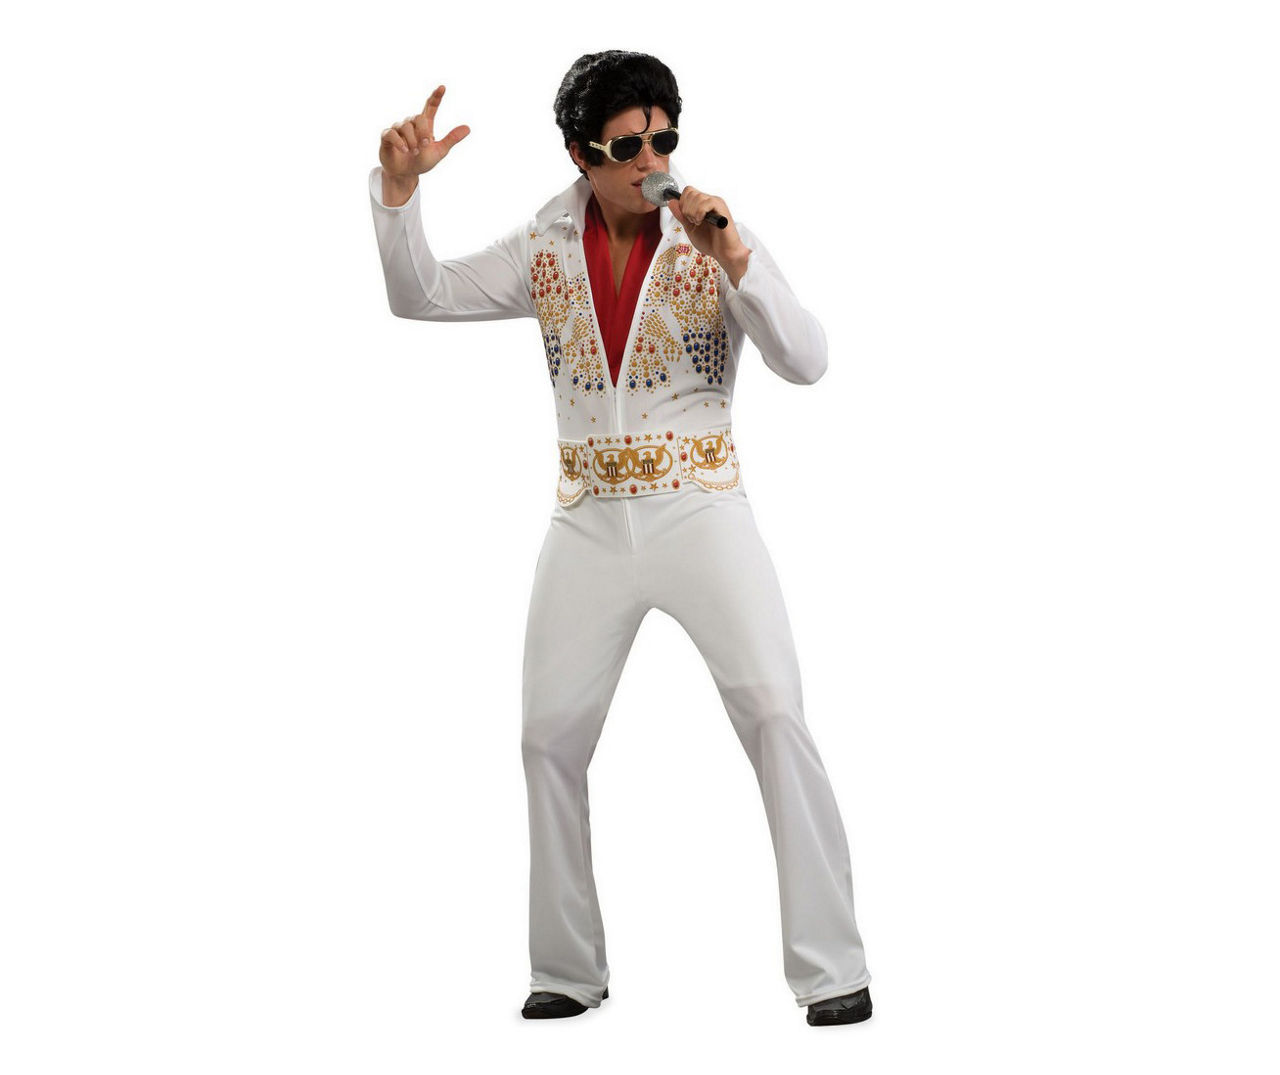 Adult Size S Deluxe Elvis Costume